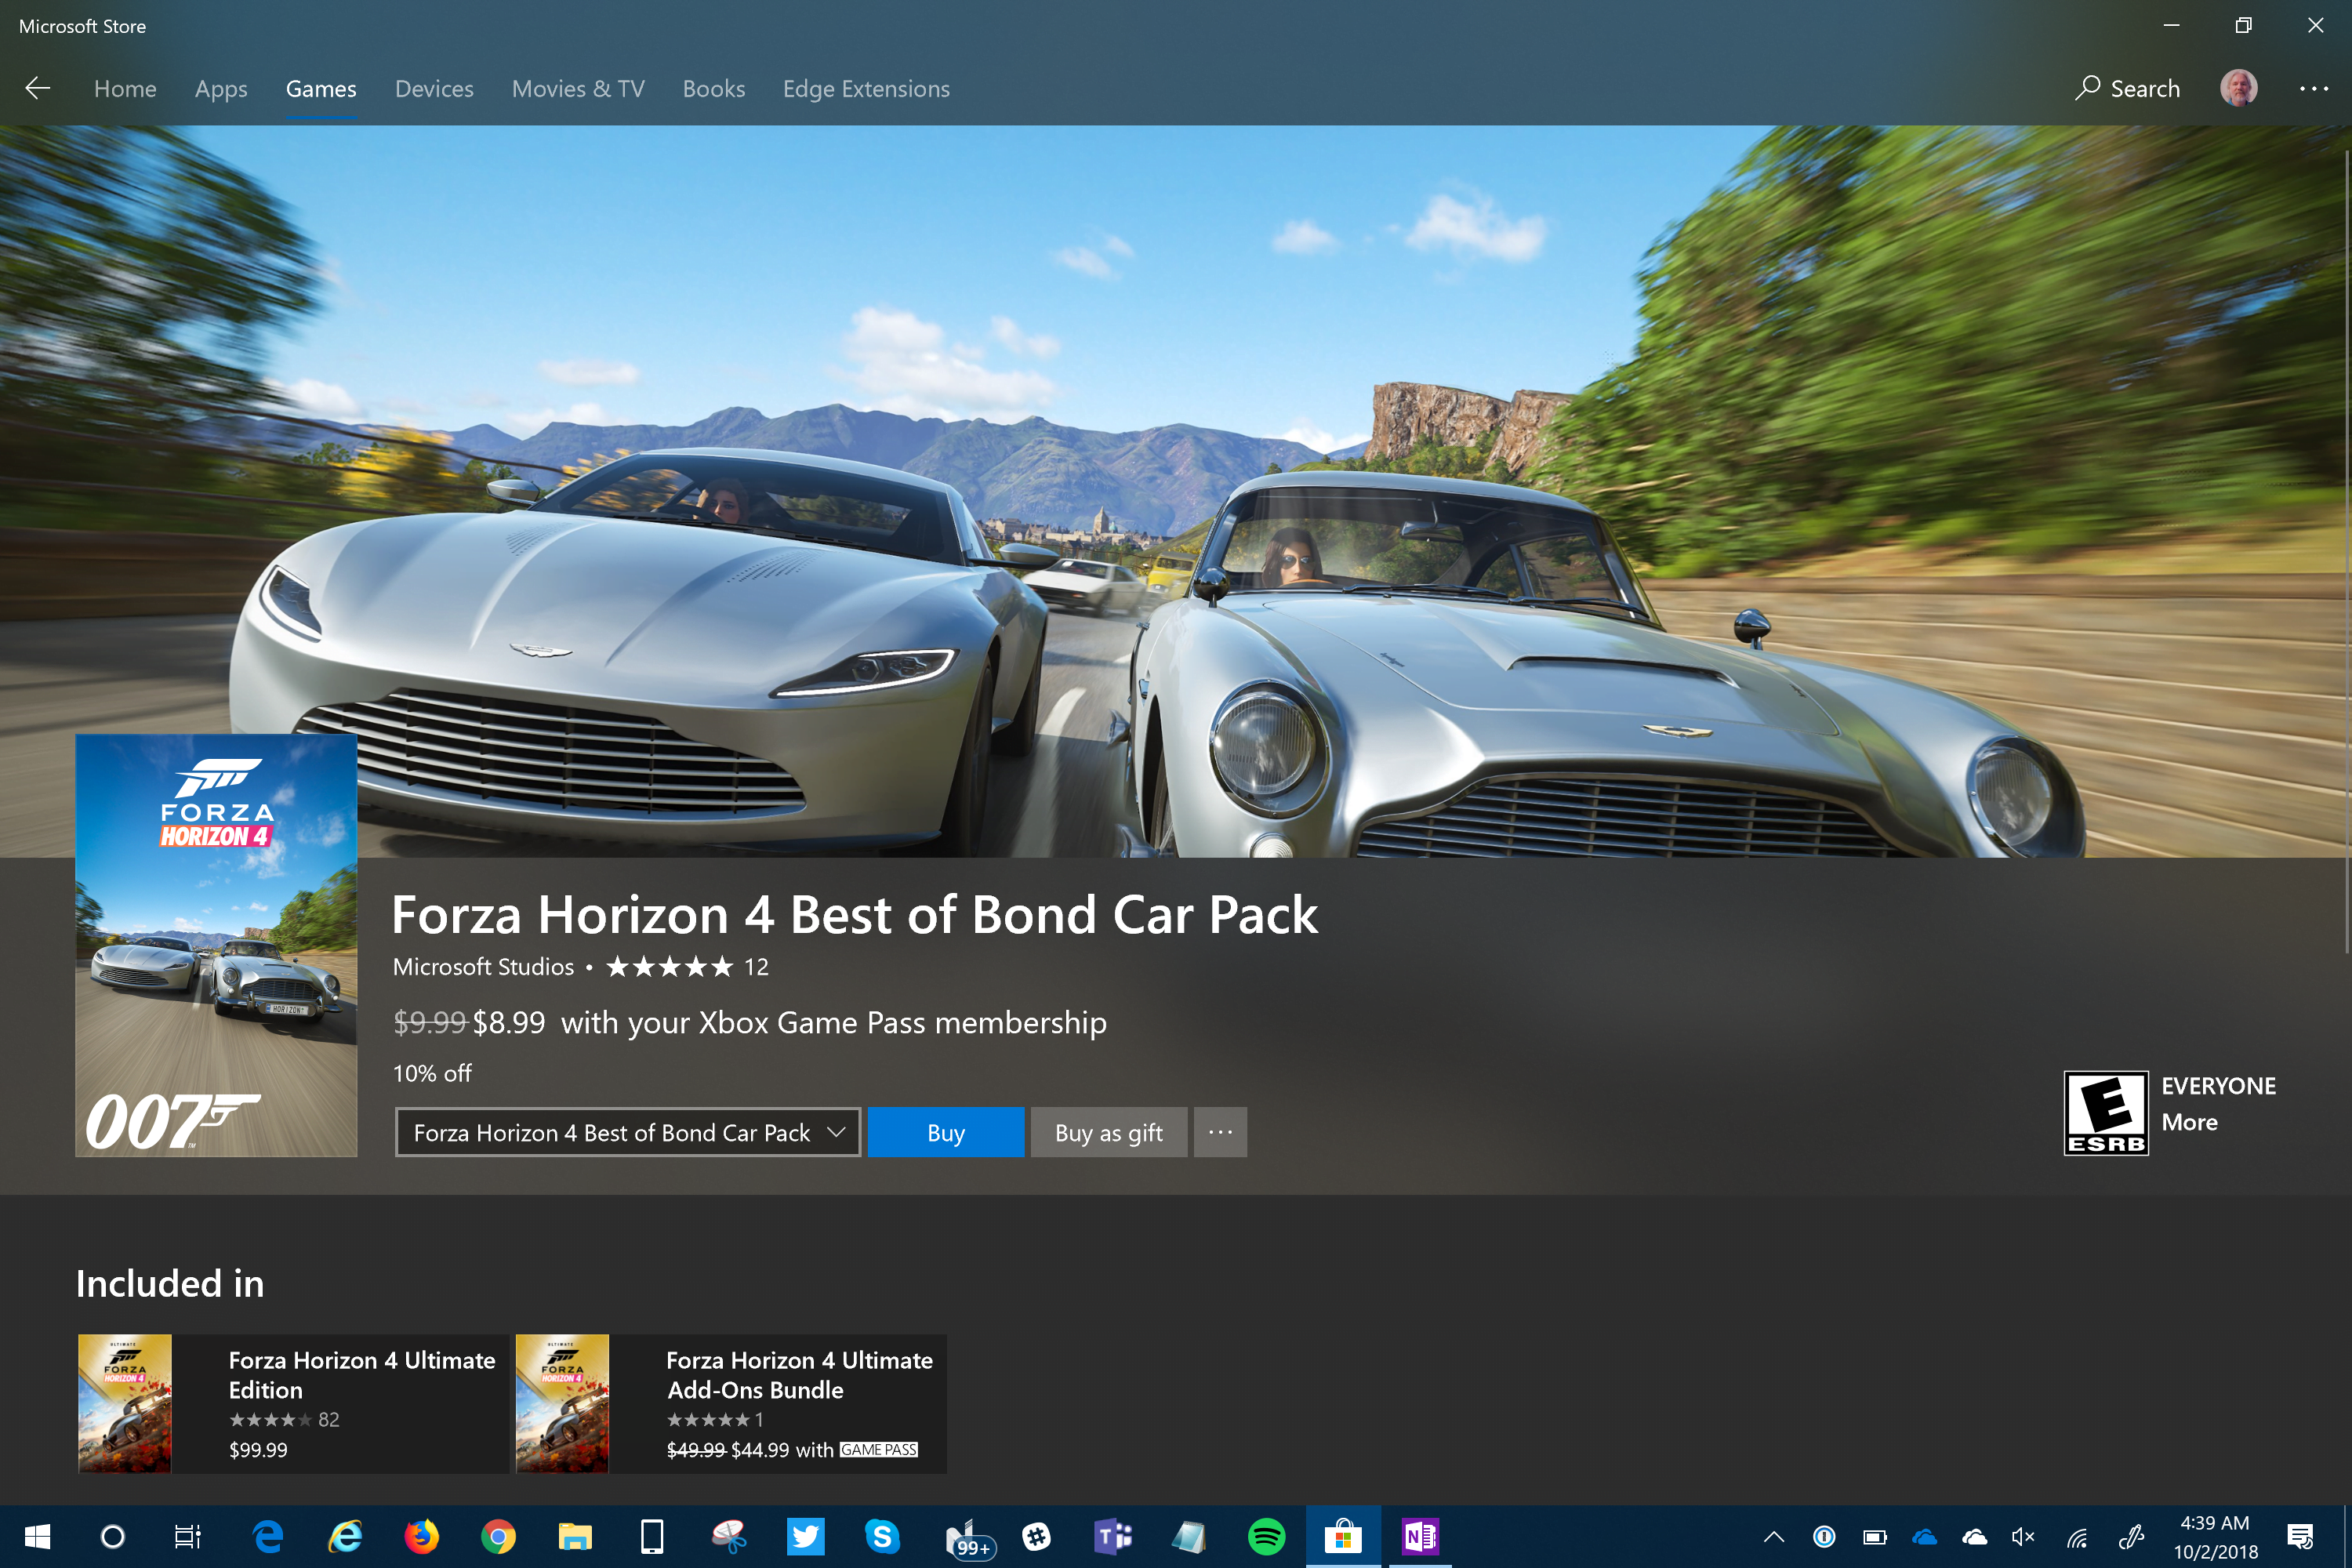 Forza Horizon Ultimate Add-Ons Bundle